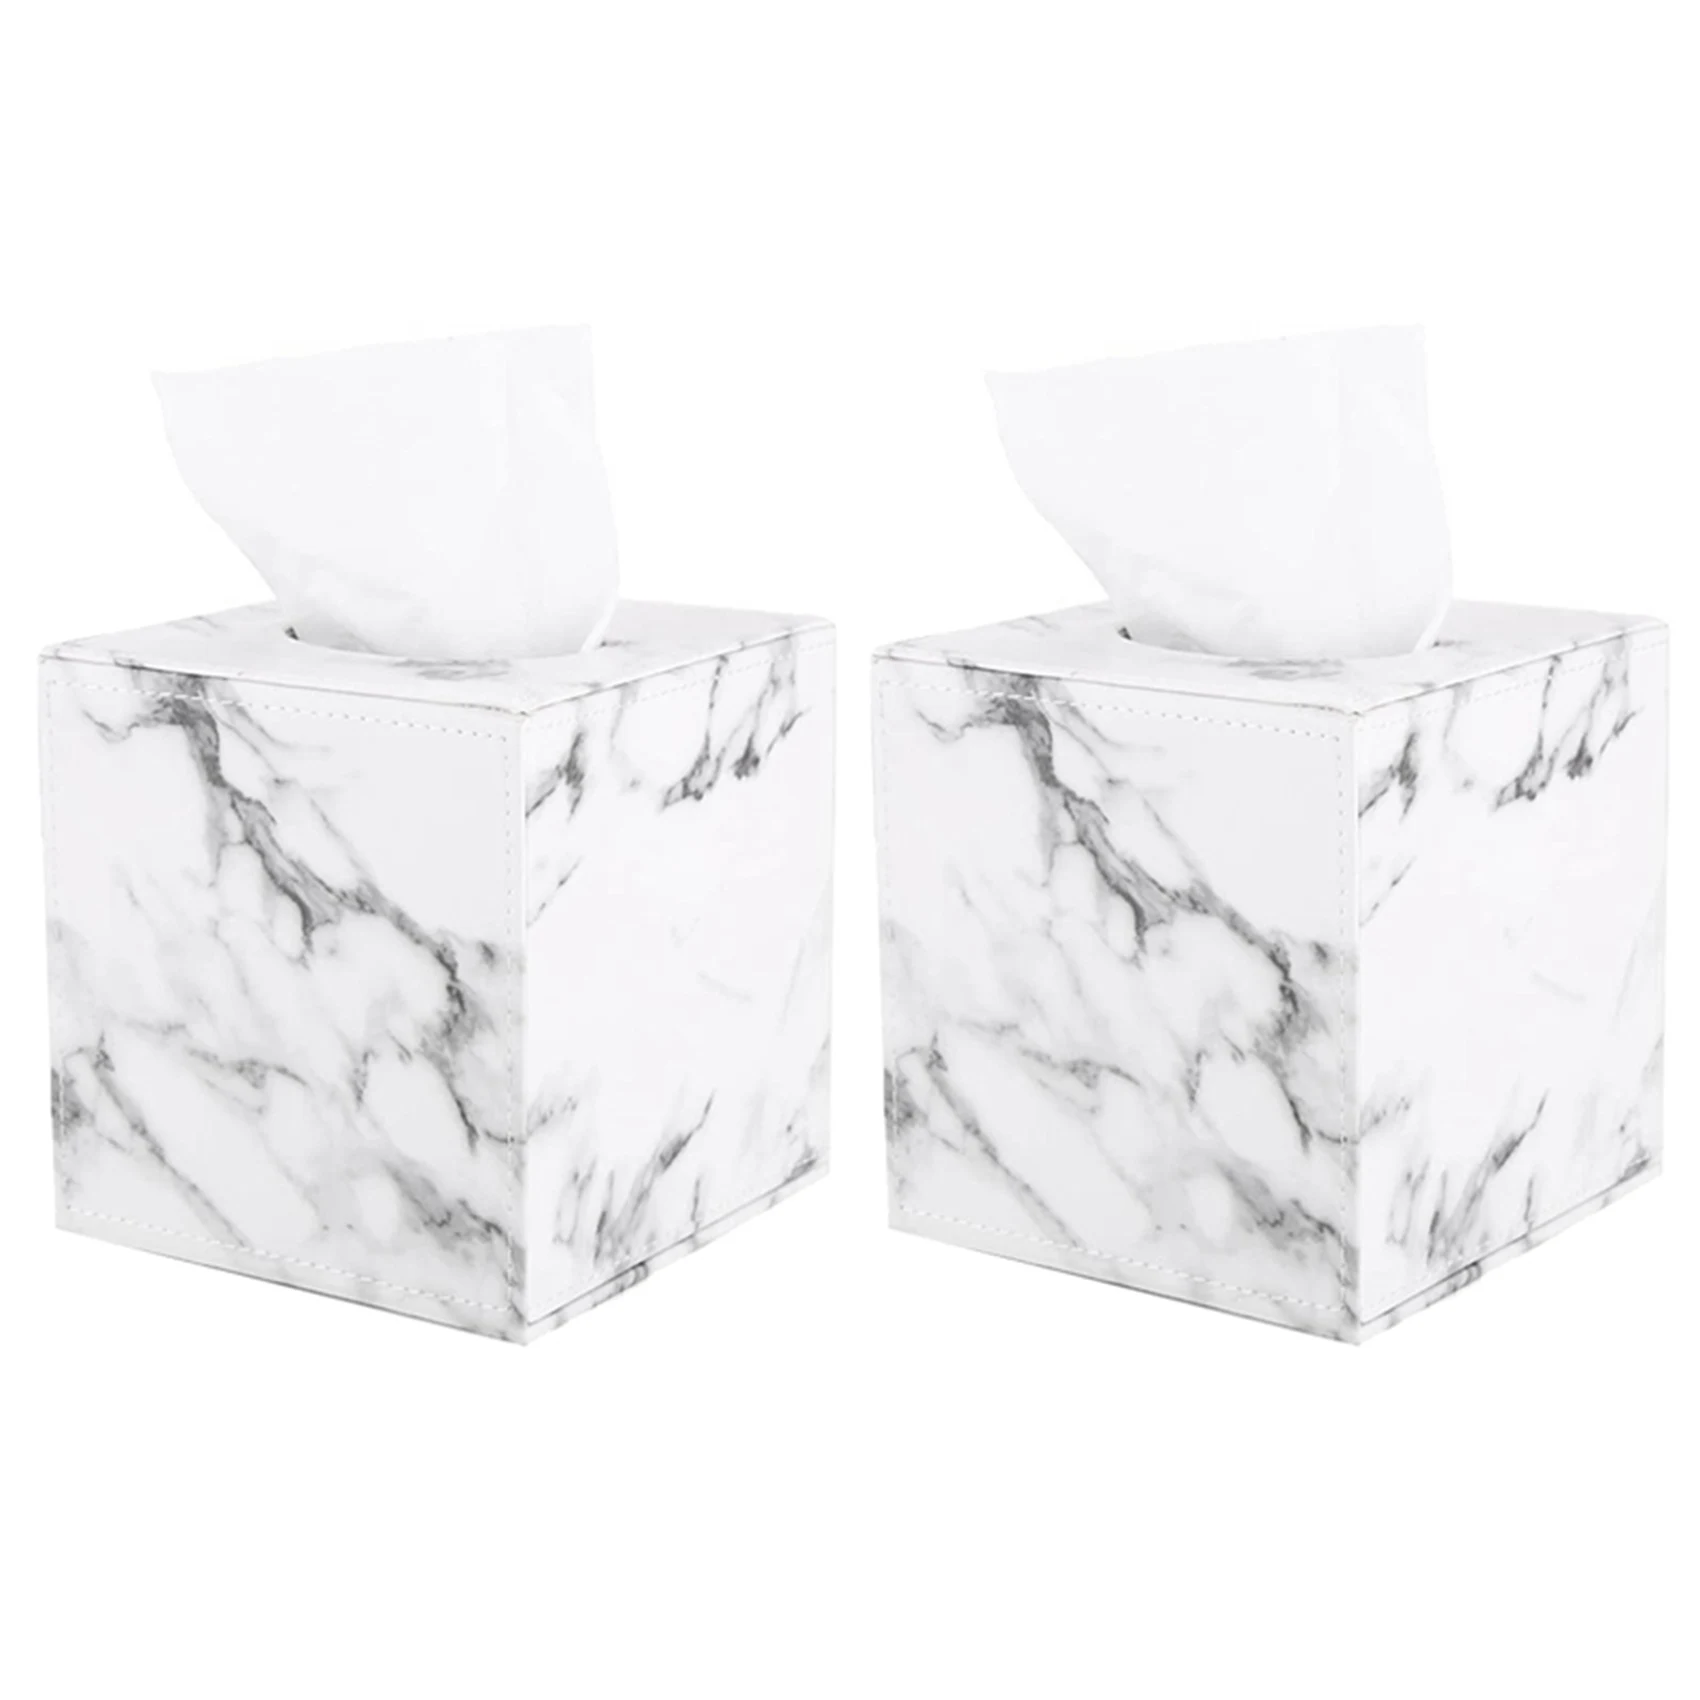 

2X Marble Square Square Tissue Box PU Leather Roll Paper Holder Toilet Paper Box Napkin Paper Box Cover Locker Towel Box